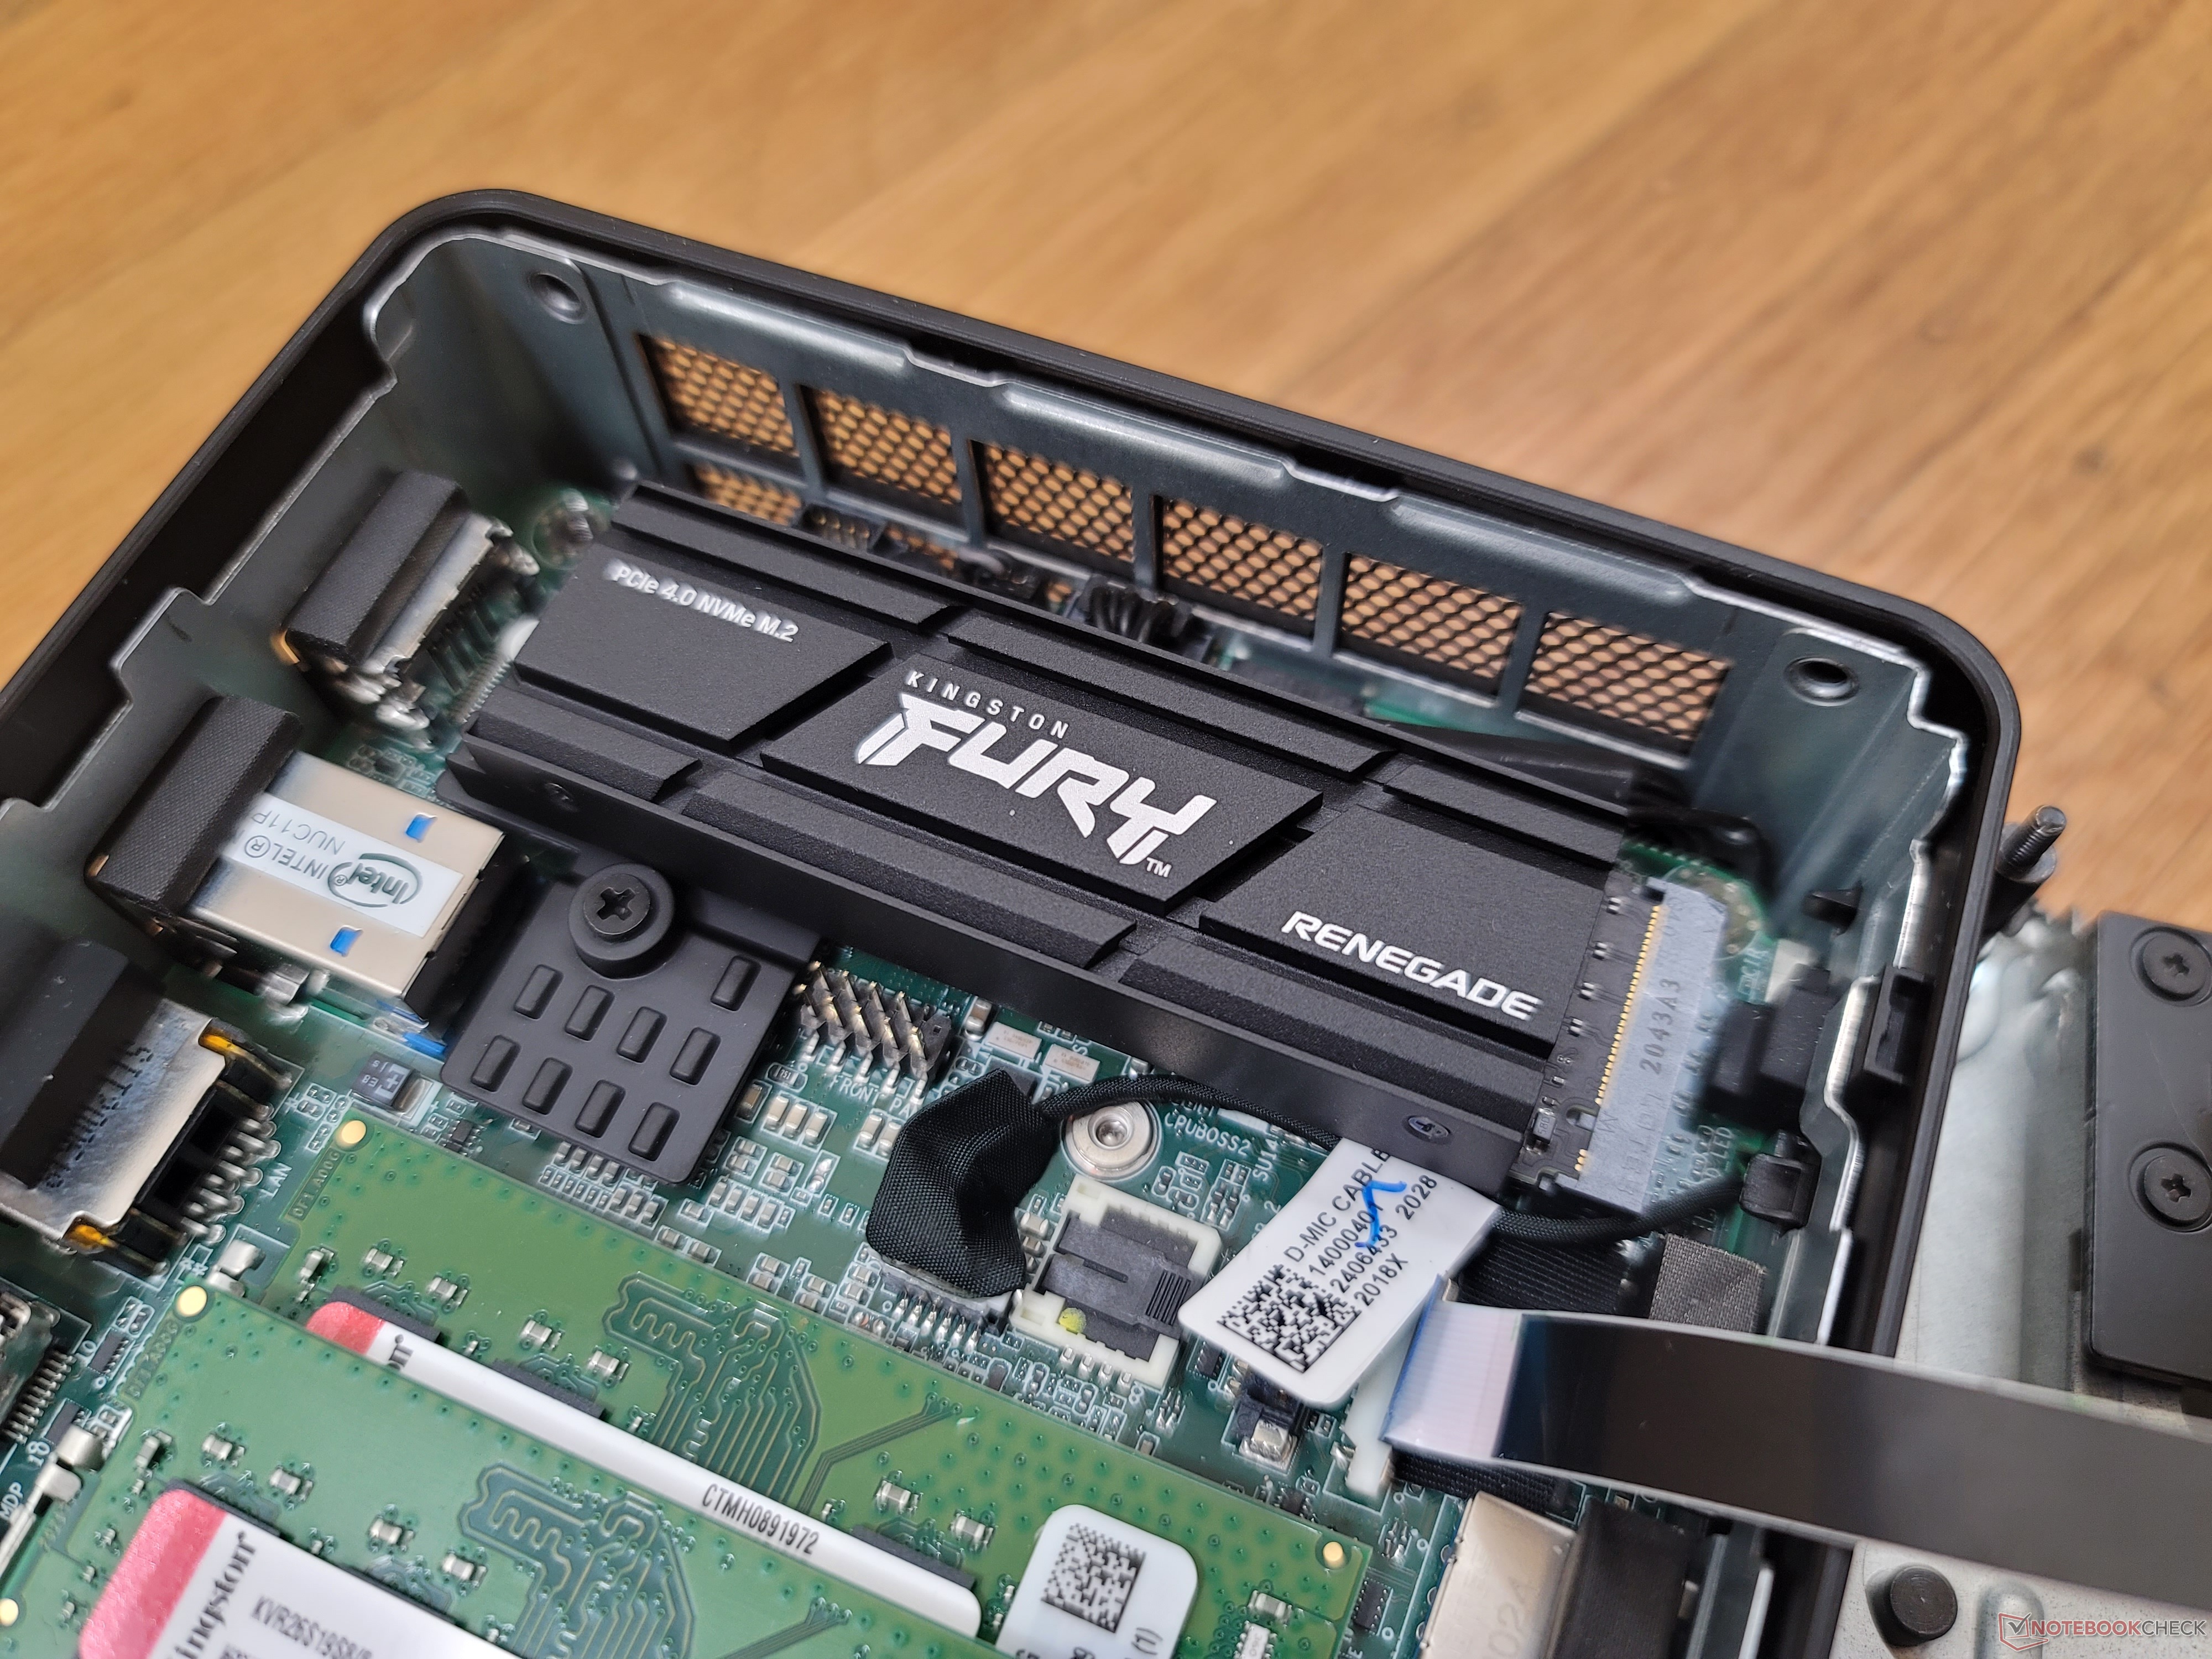 Test : Kingston FURY Renegade PCIe 4.0 NVMe 2To